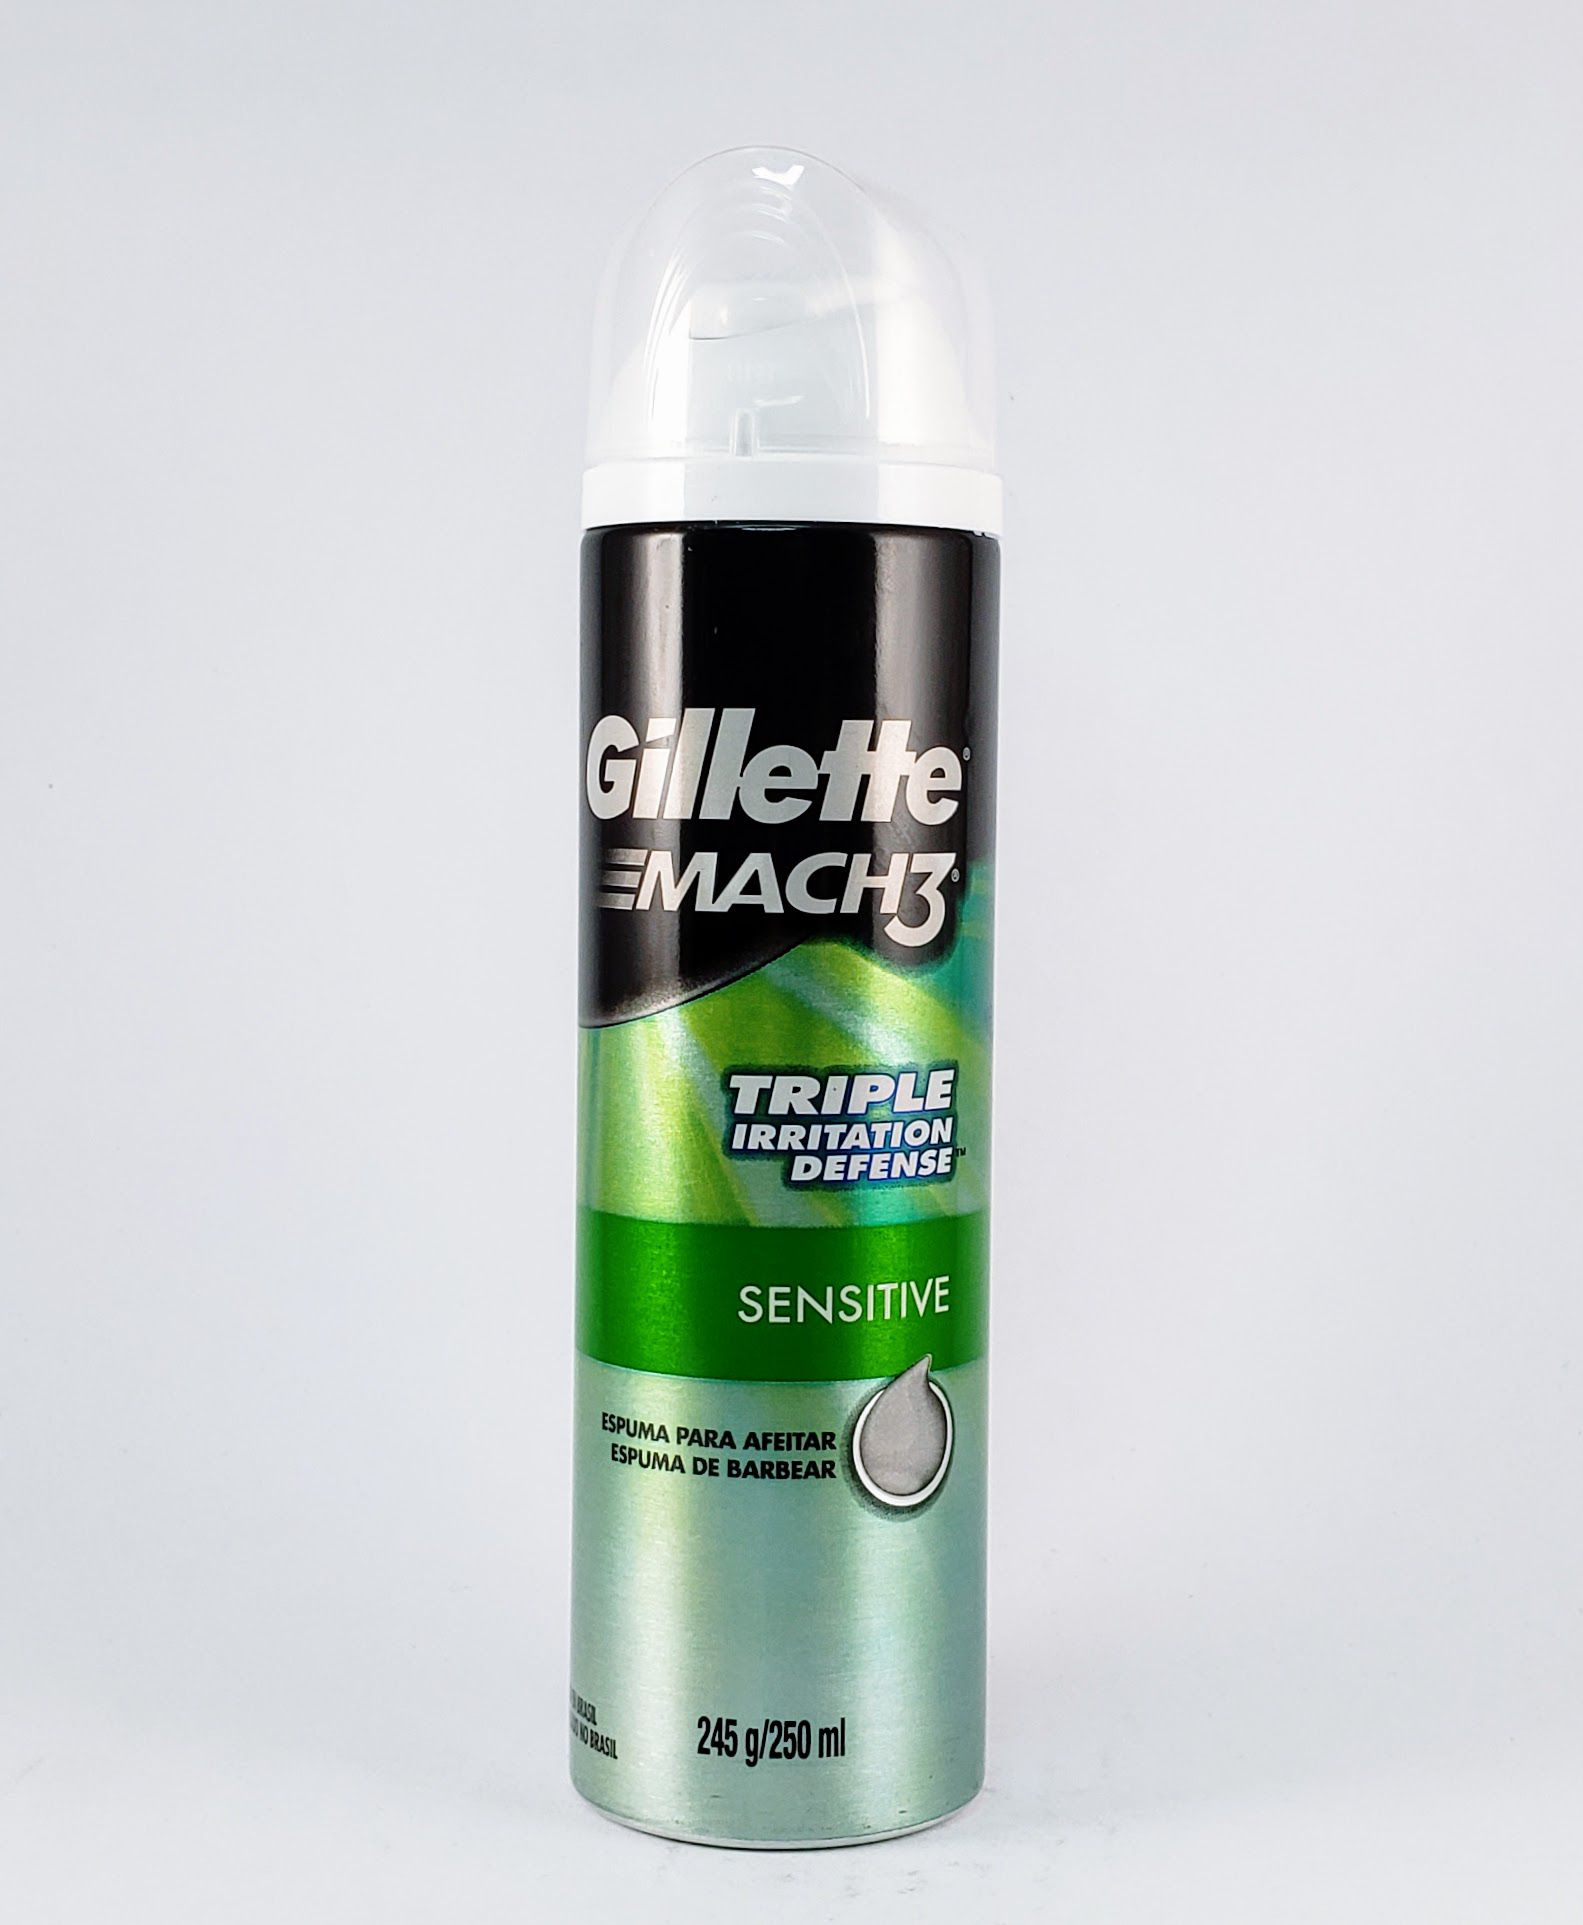 Espuma de Afeitar Gillette Prestobarba Sensitive 57 ml